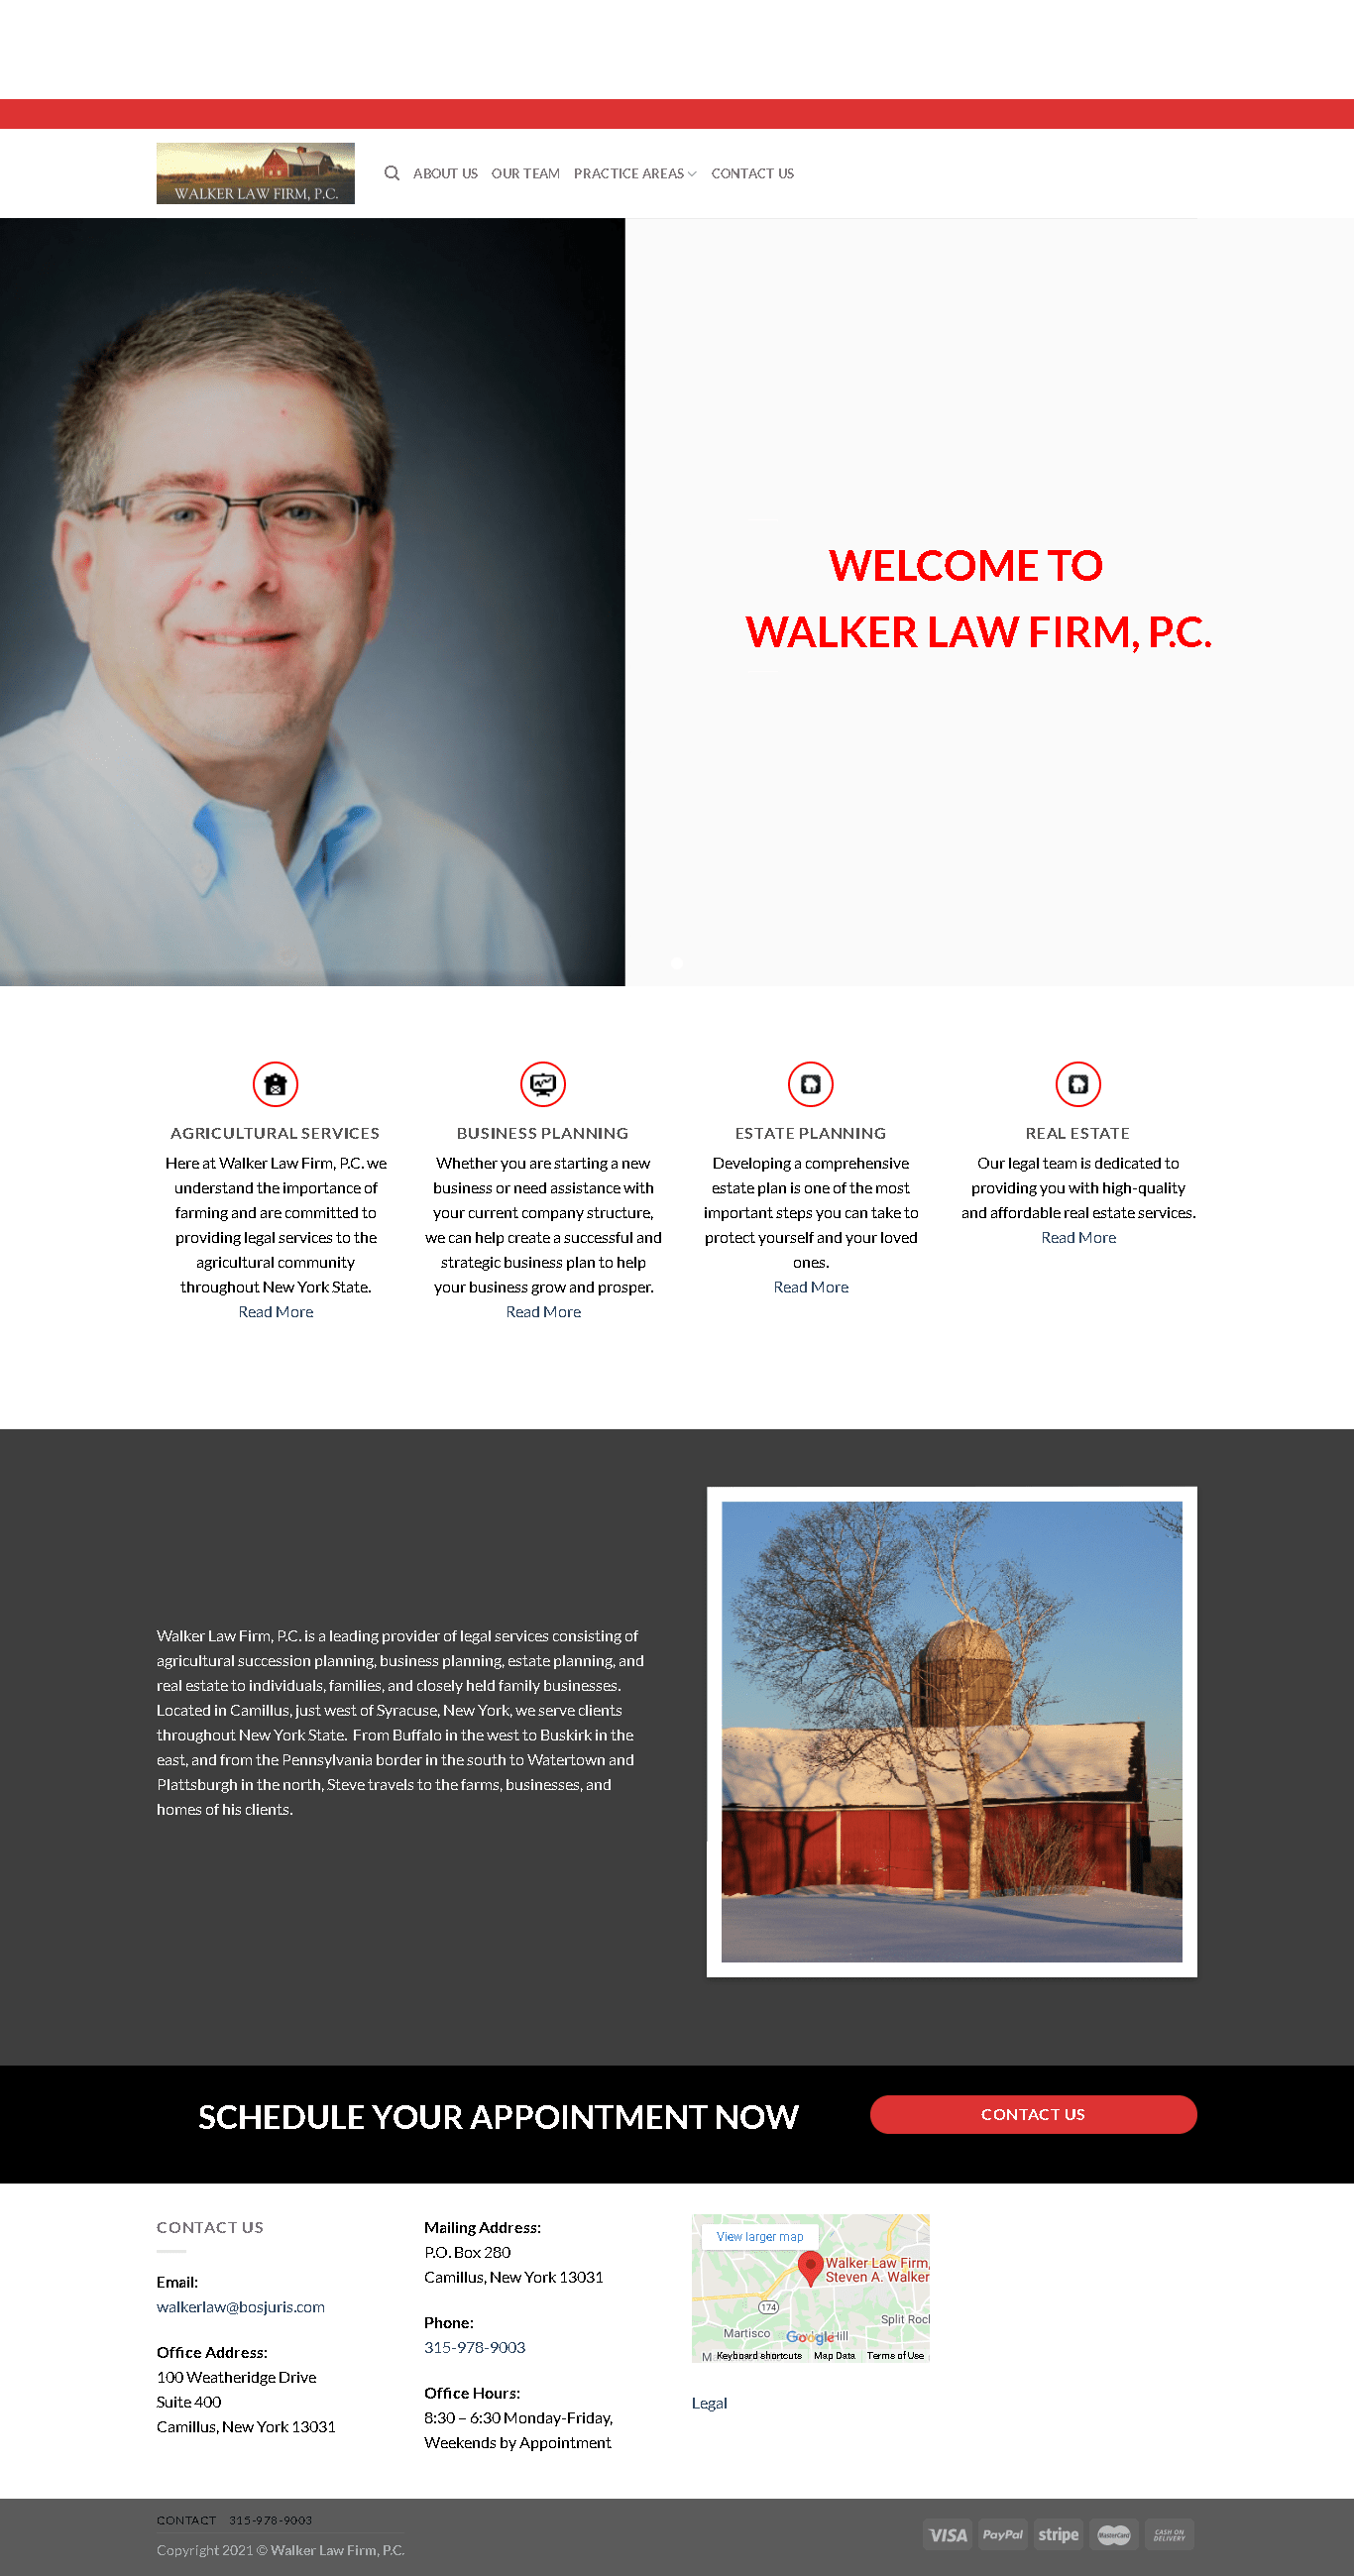 Walker Law Firm, P.C. desktop